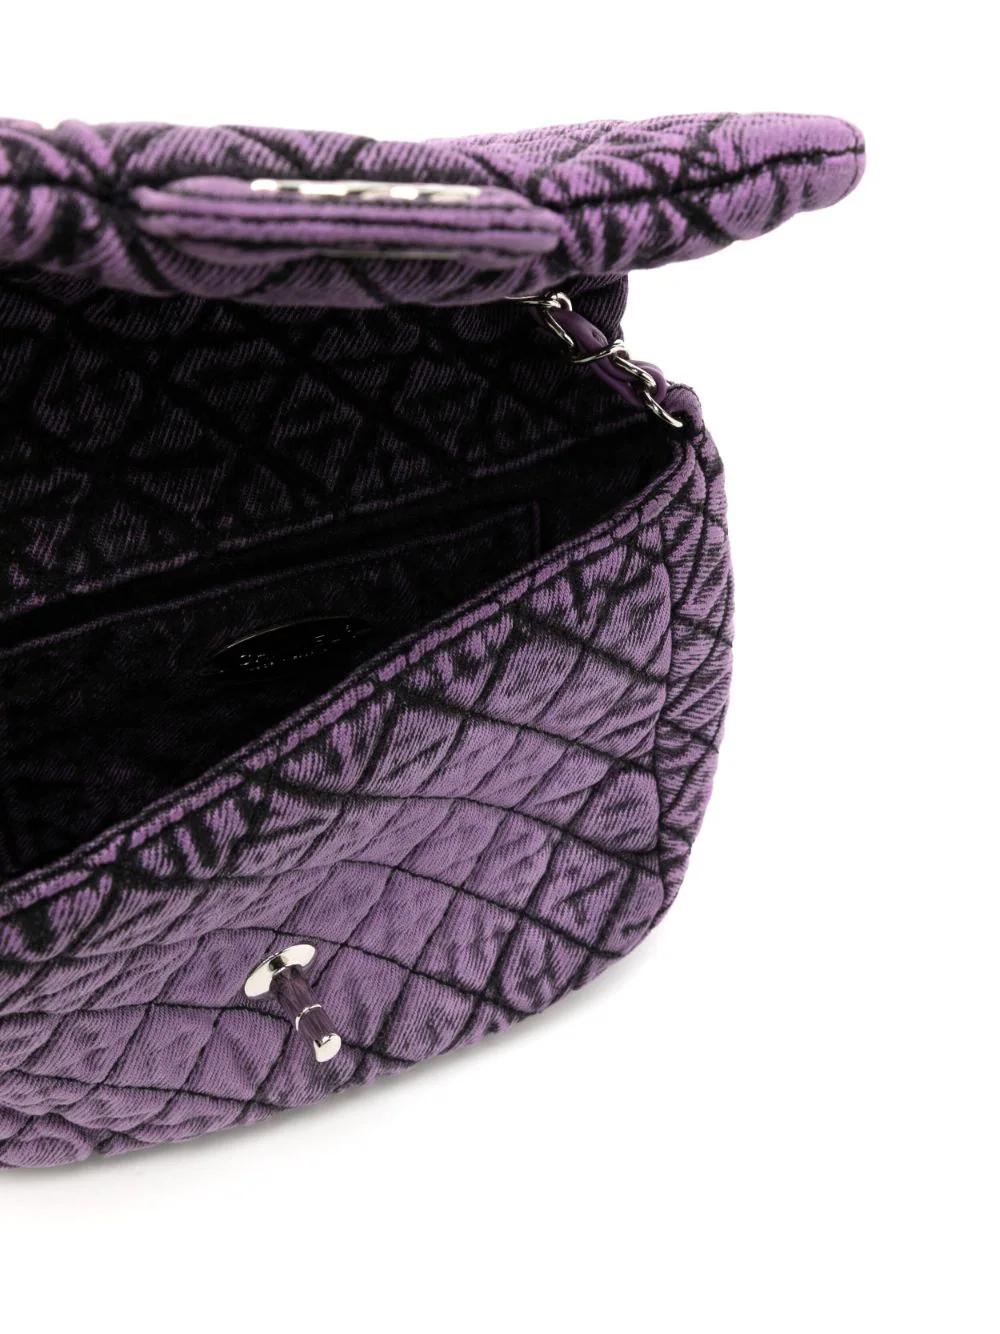 Women's or Men's Chanel Runway Mini Denimpression Flap Bag For Sale